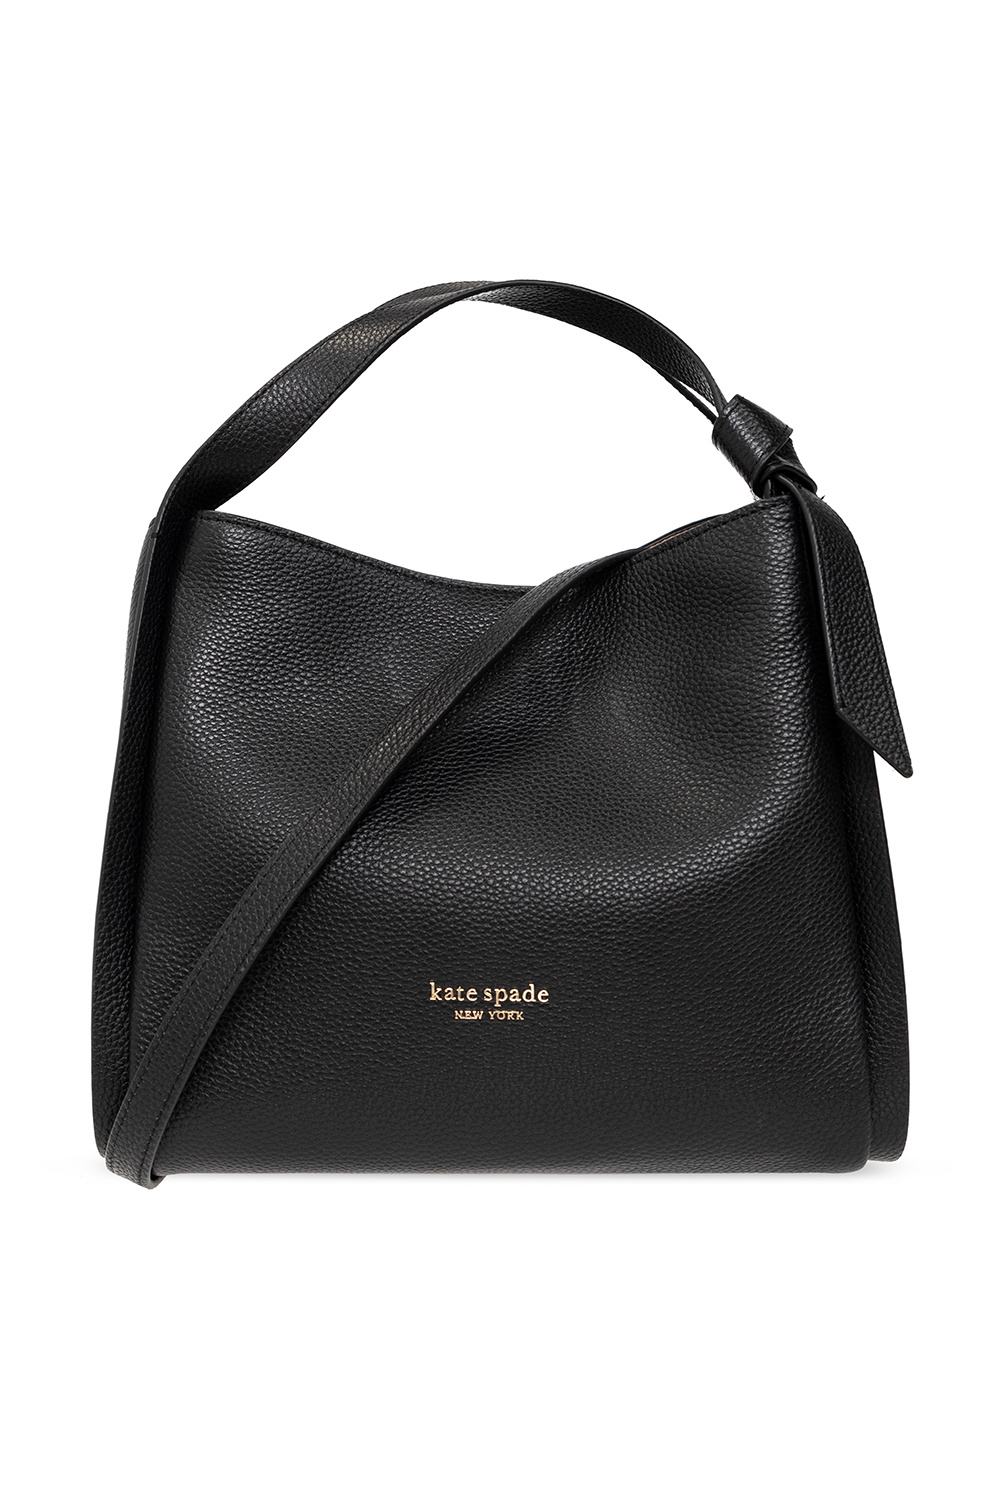 IetpShops Guinea - 'Knott Medium' shoulder bag Kate Spade - backpack adidas  small ac bl bp gd4575 black